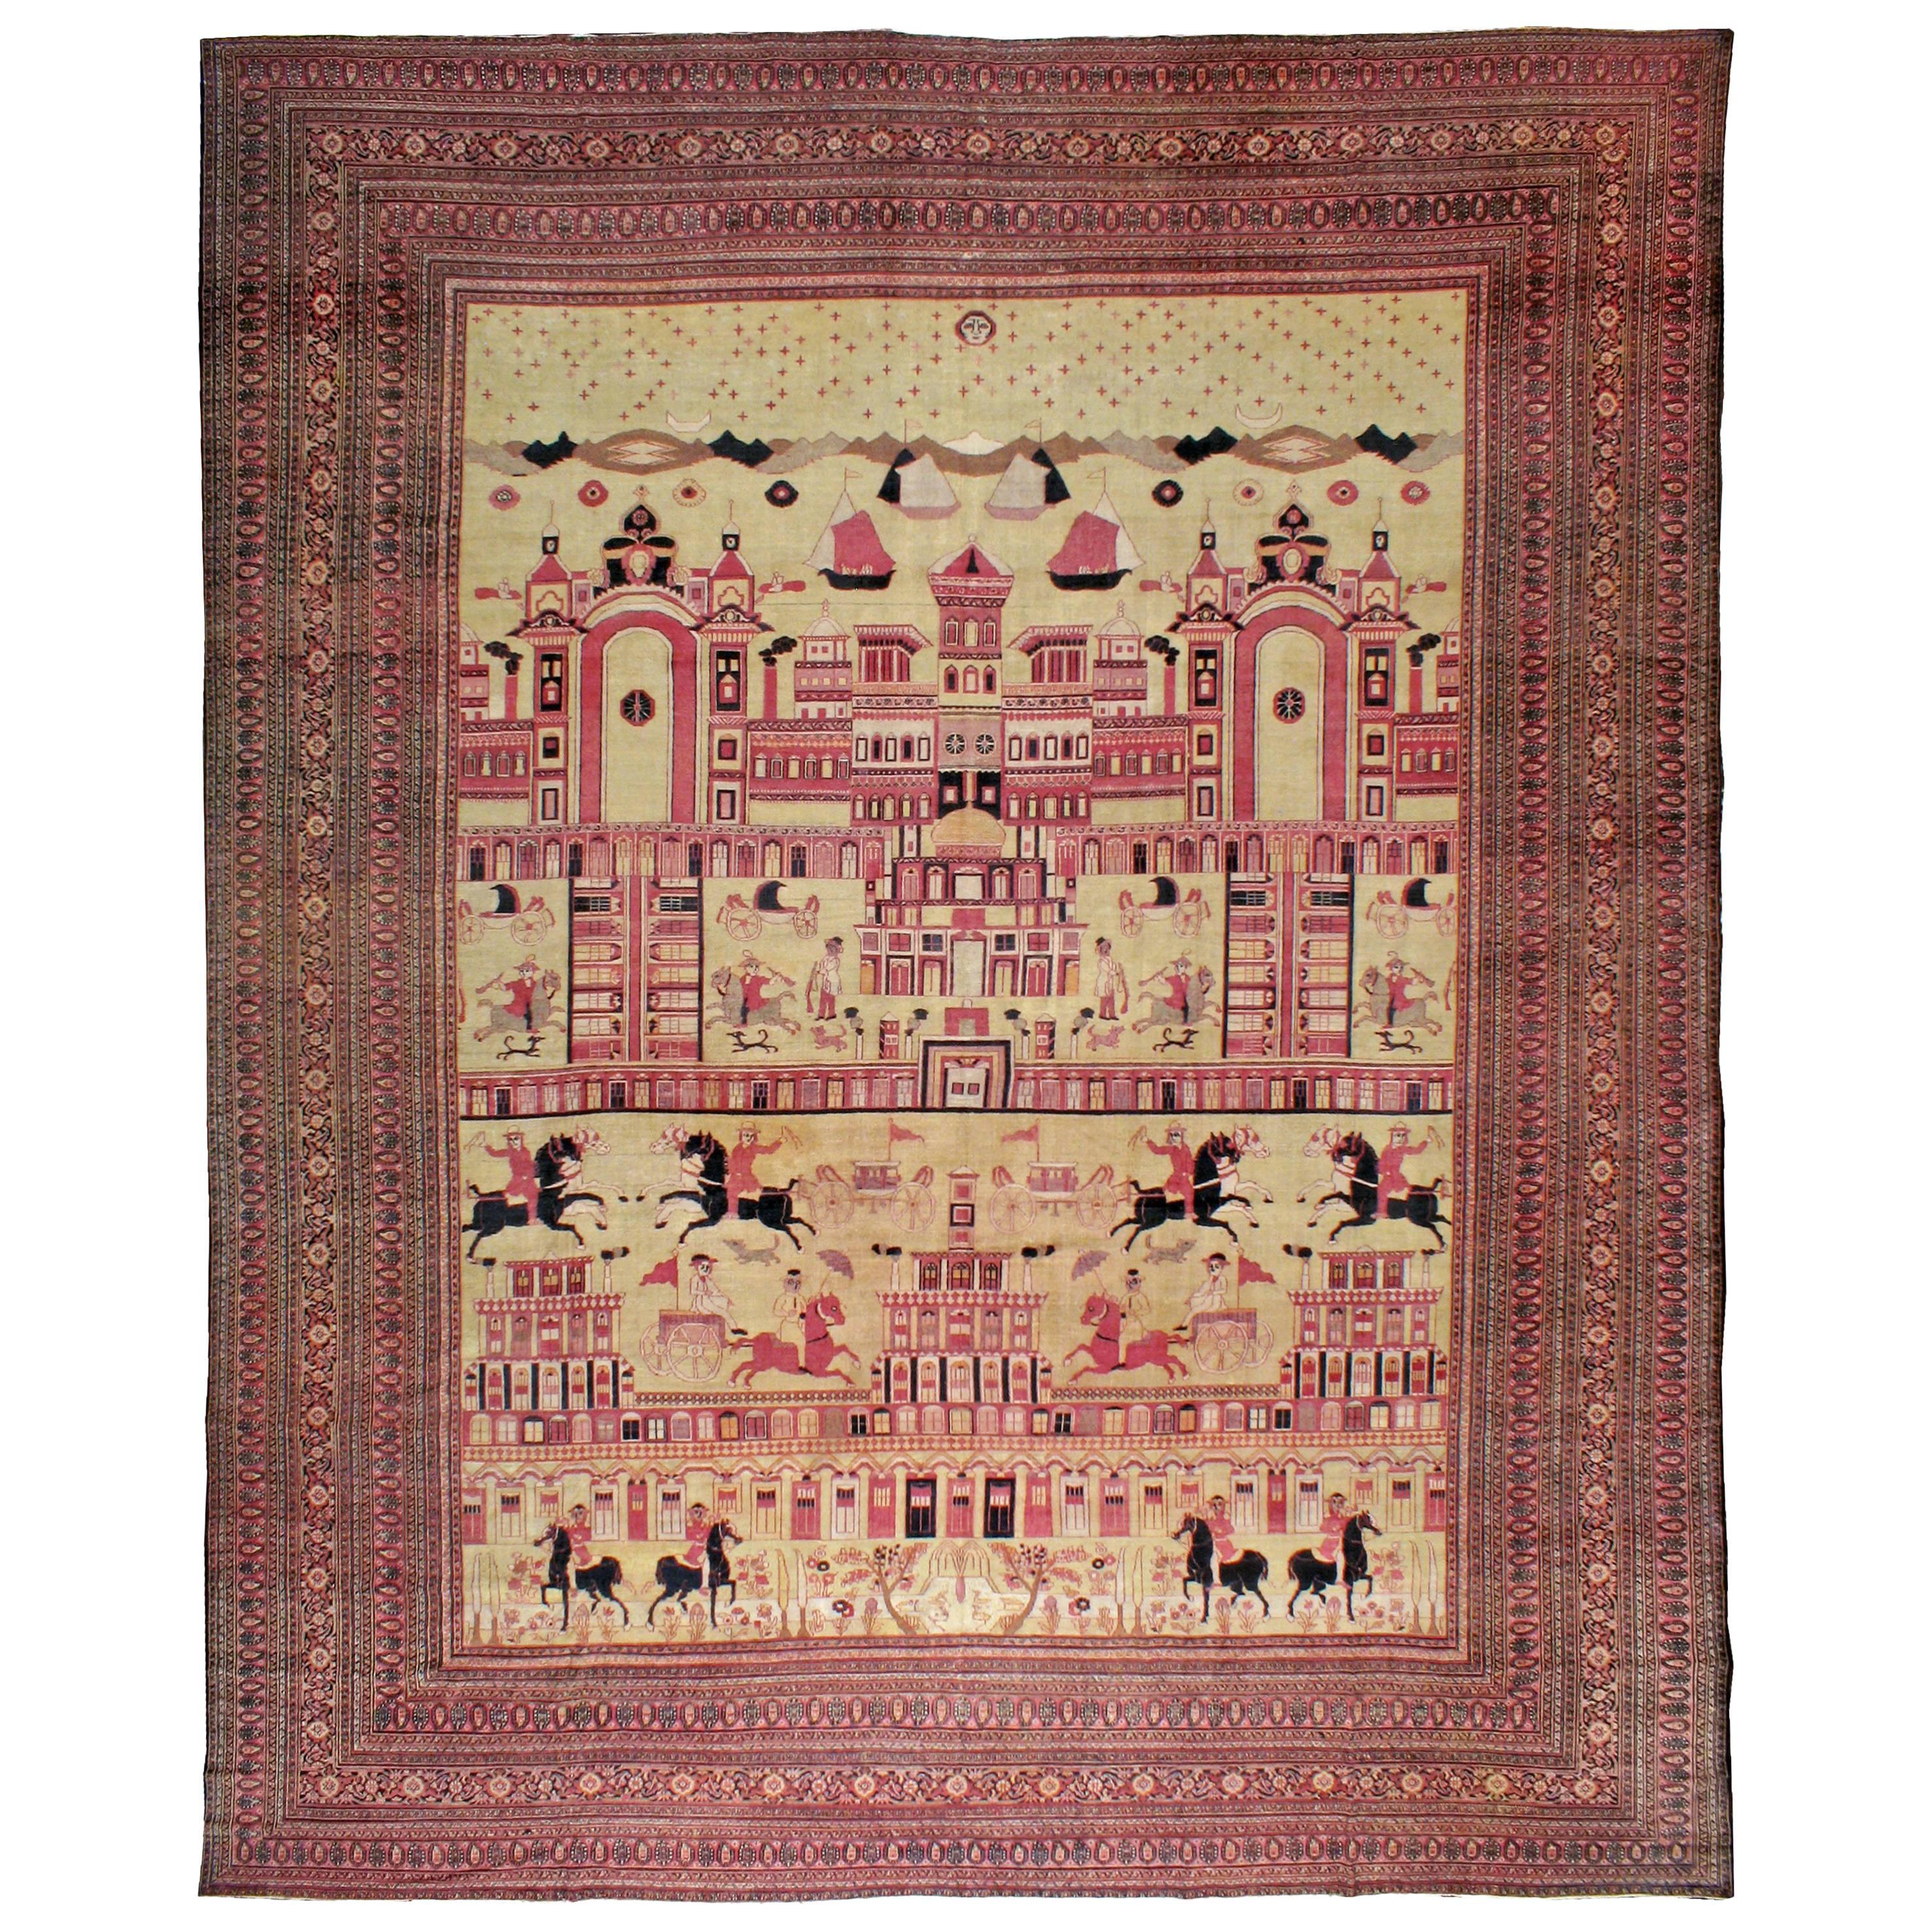 Antique Persian Pictorial Khorassan Carpet